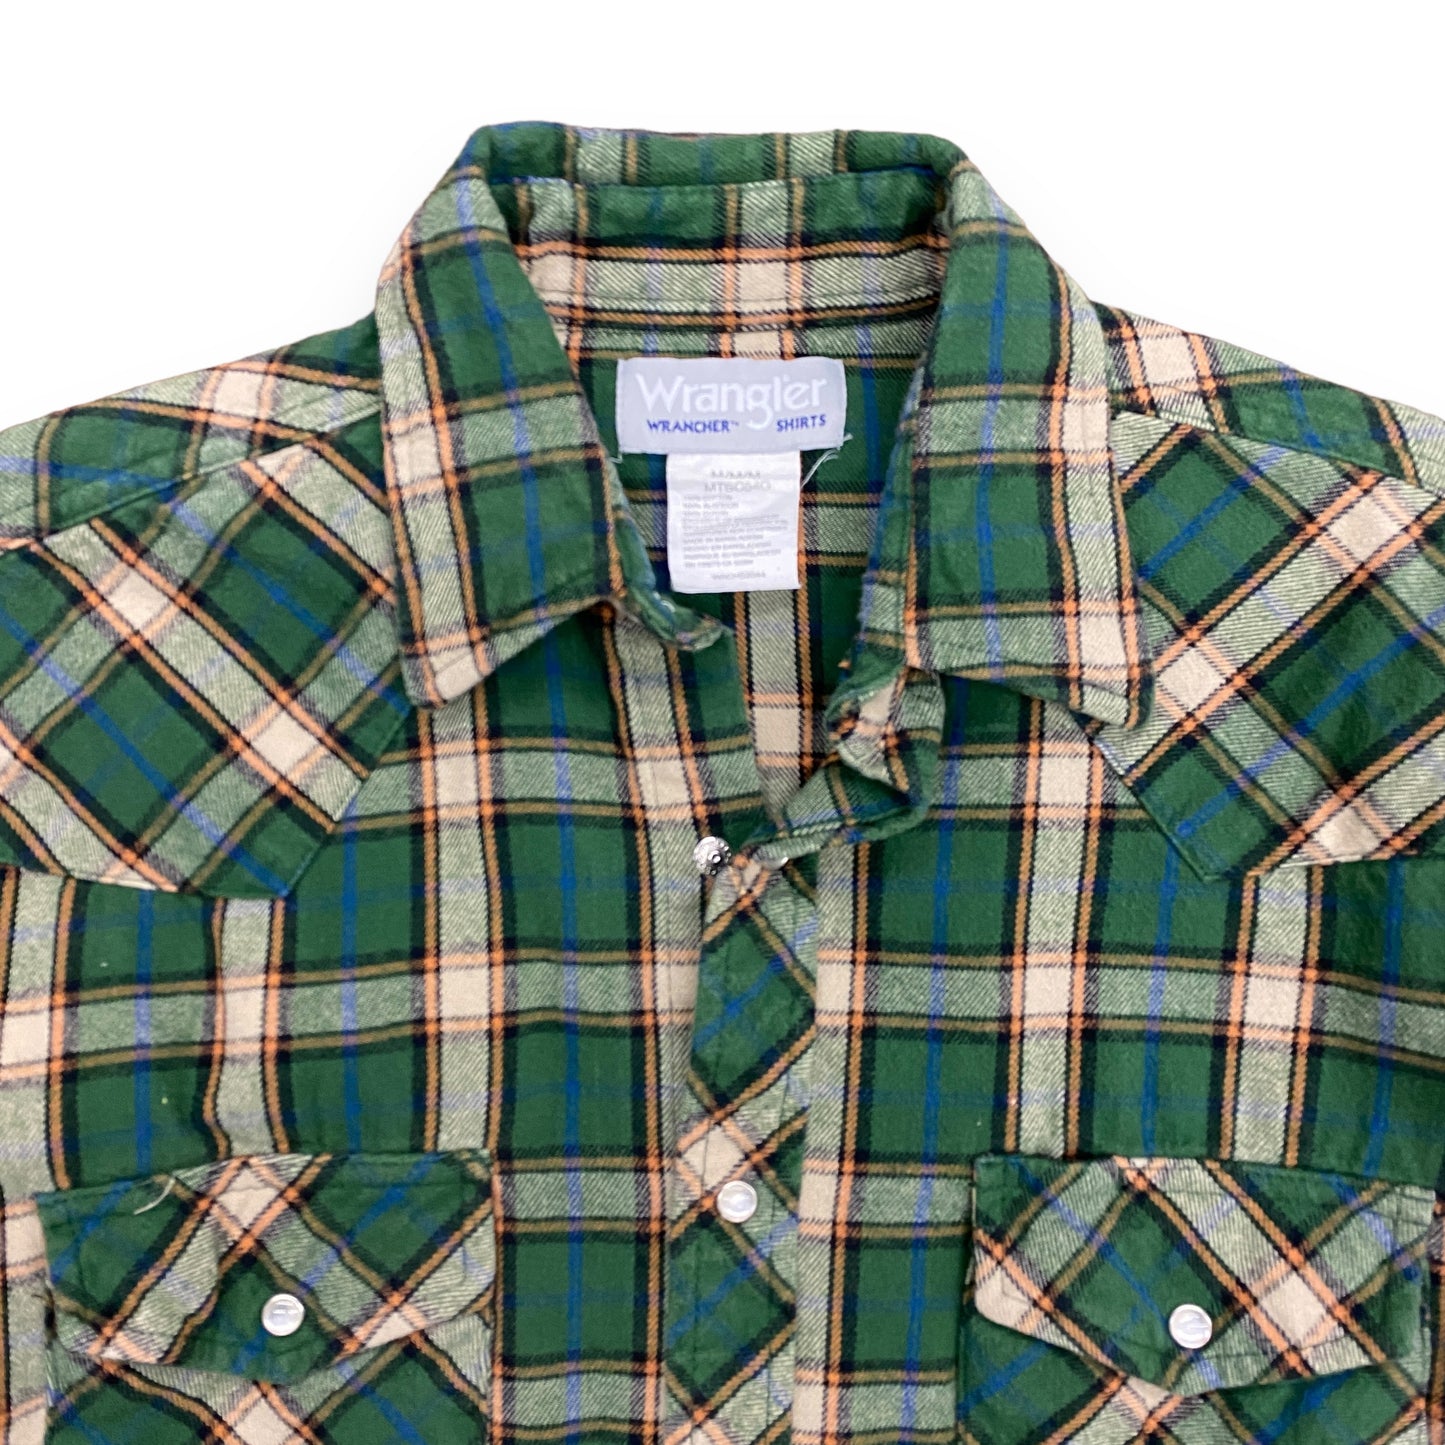 Wrangler Wrancher Green Plaid Pearl Snap Western Shirt - Size Medium